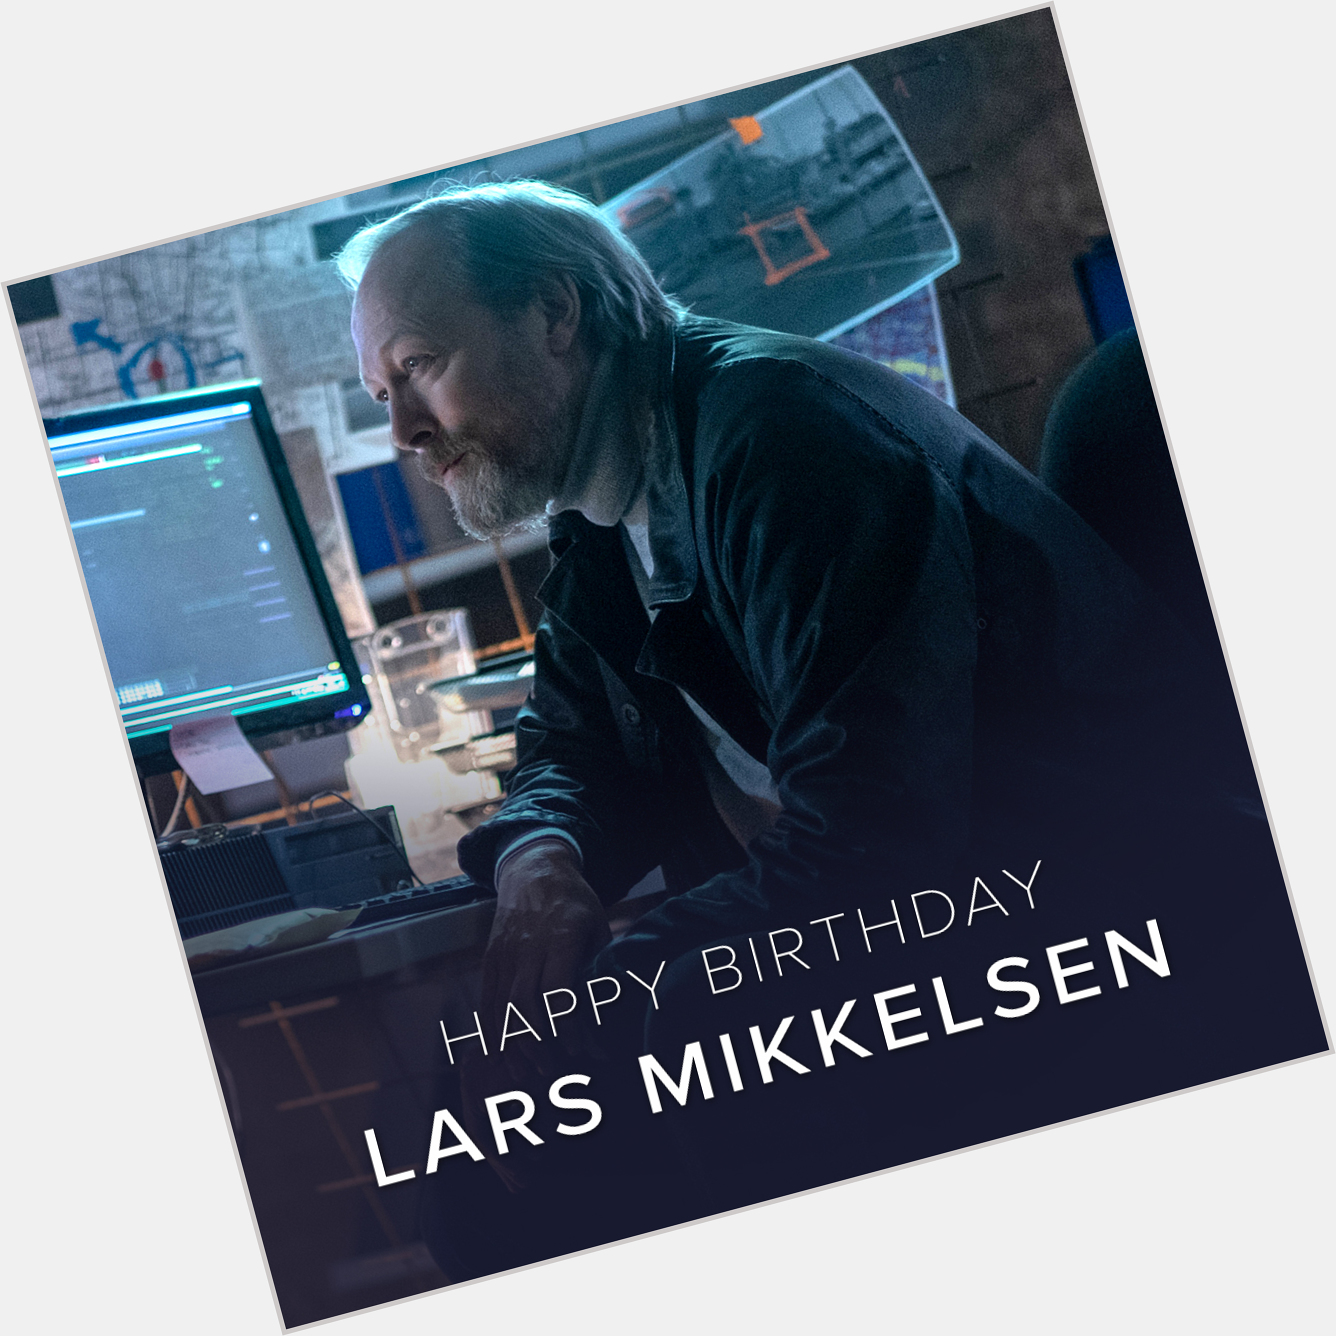 Take the day off! Happy birthday, Lars Mikkelsen! 